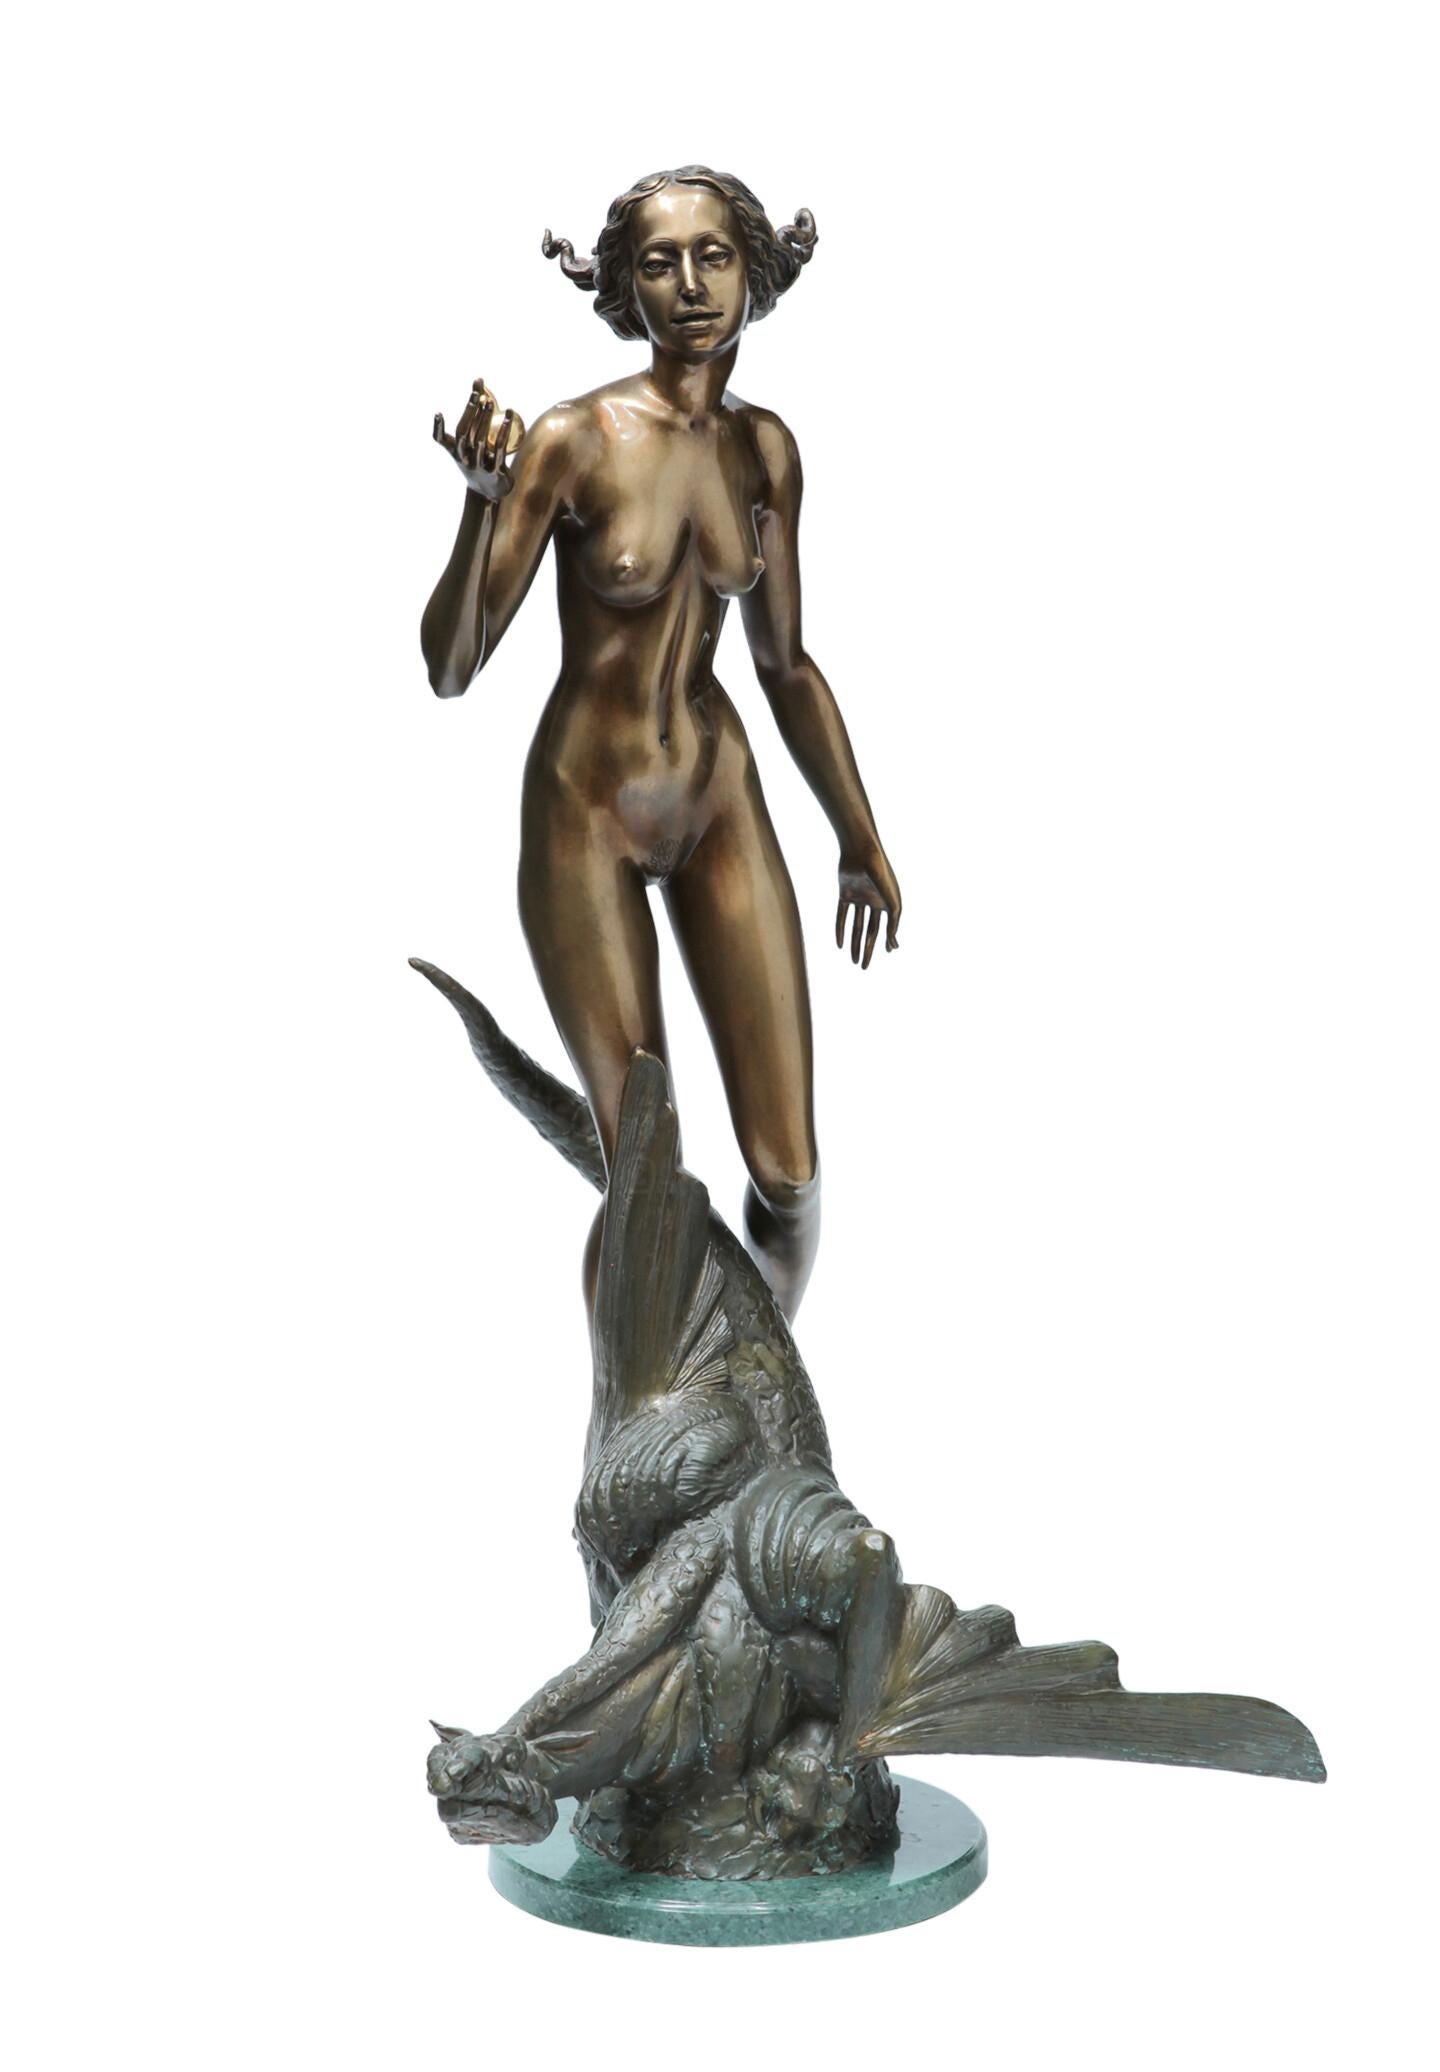 Volodymyr MYKYTENKO Figurative Sculpture - Eve, Bronze Sculpture by Volodymyr Mykytenko, 2005